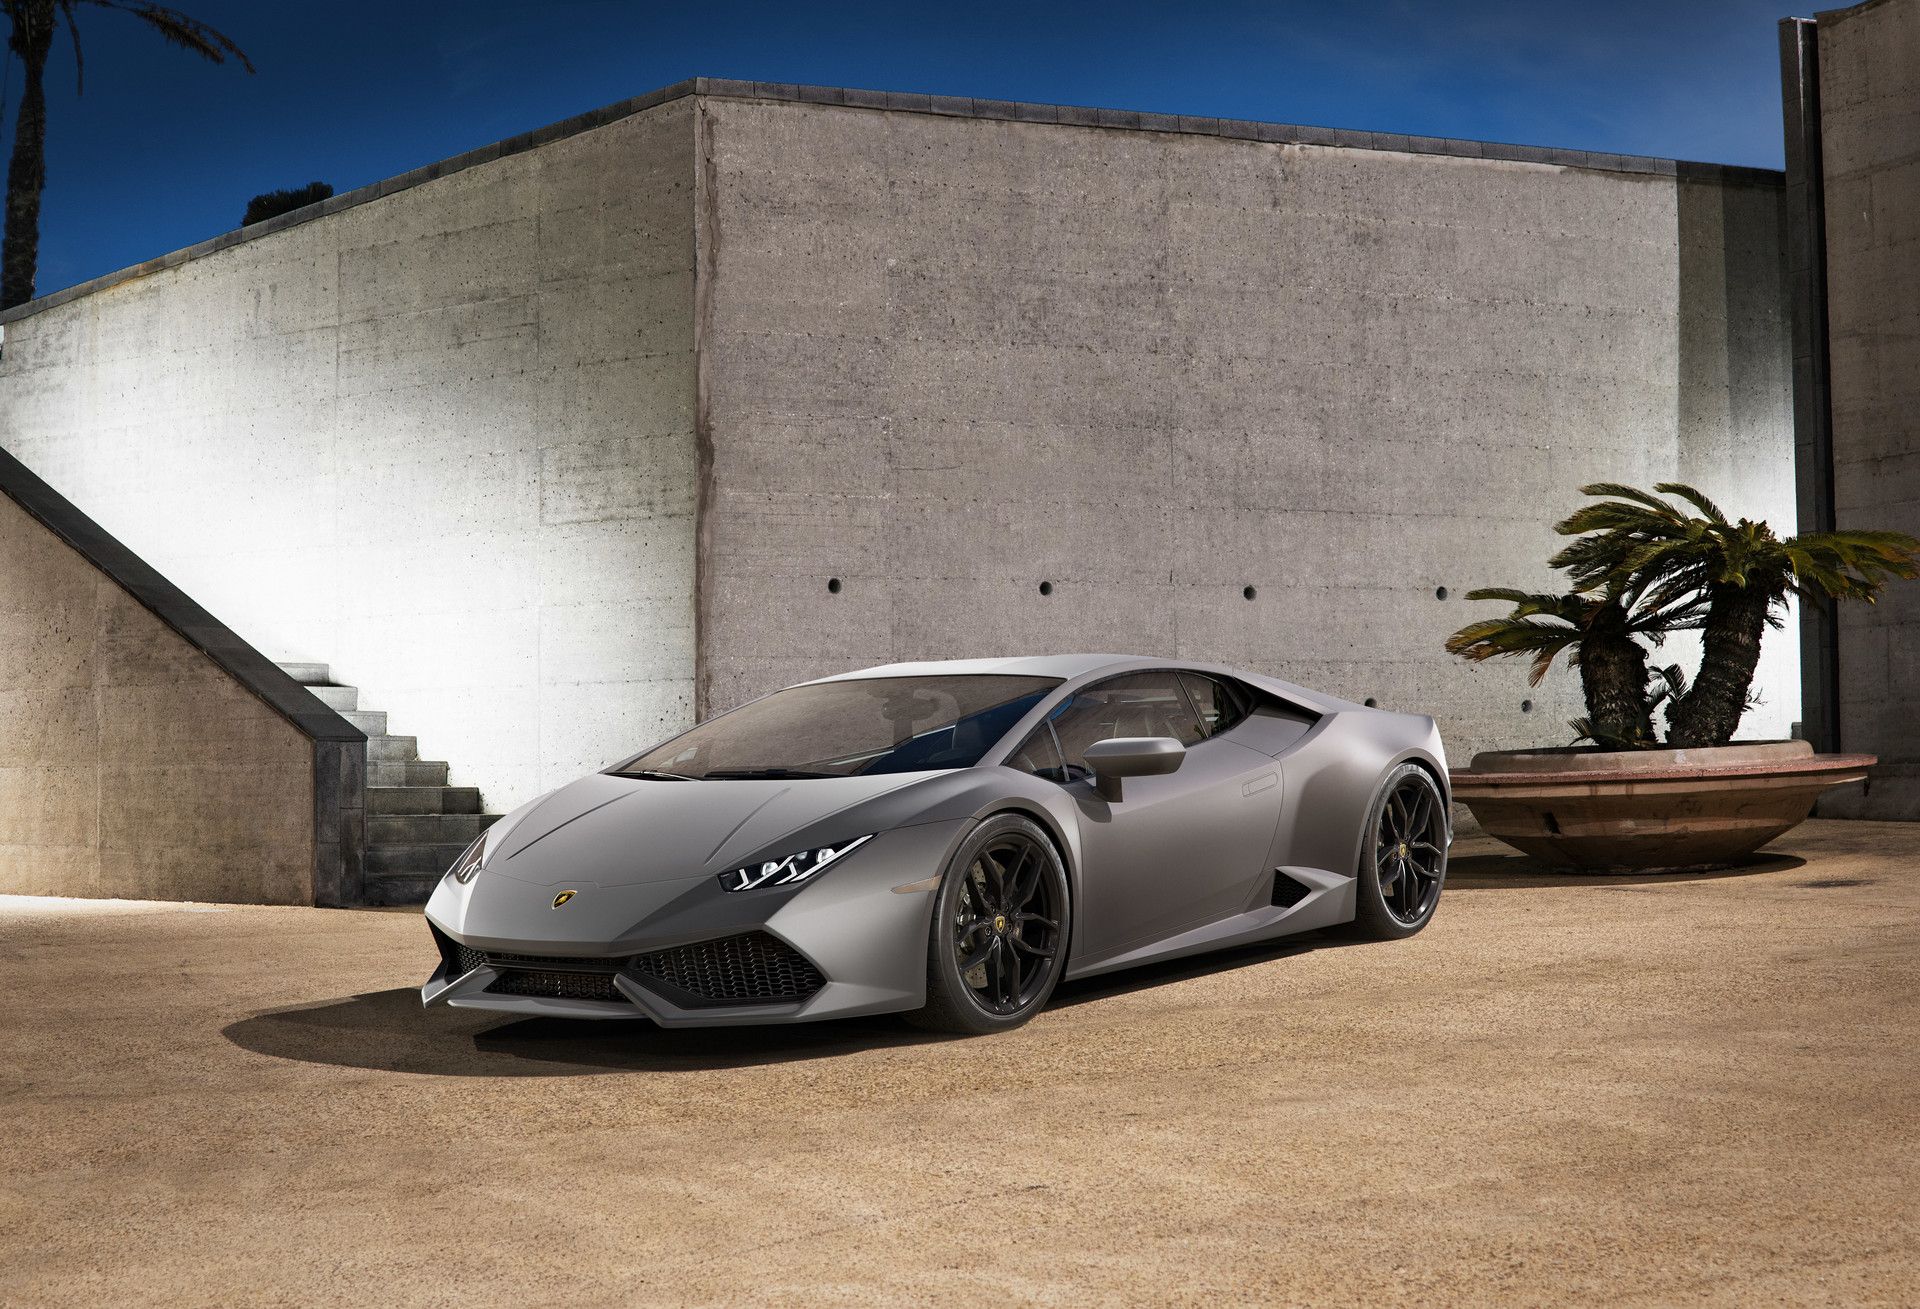 Lamborghini Huracan Silver Matt Paint, HD Cars, 4k Wallpaper, Image, Background, Photo and Picture